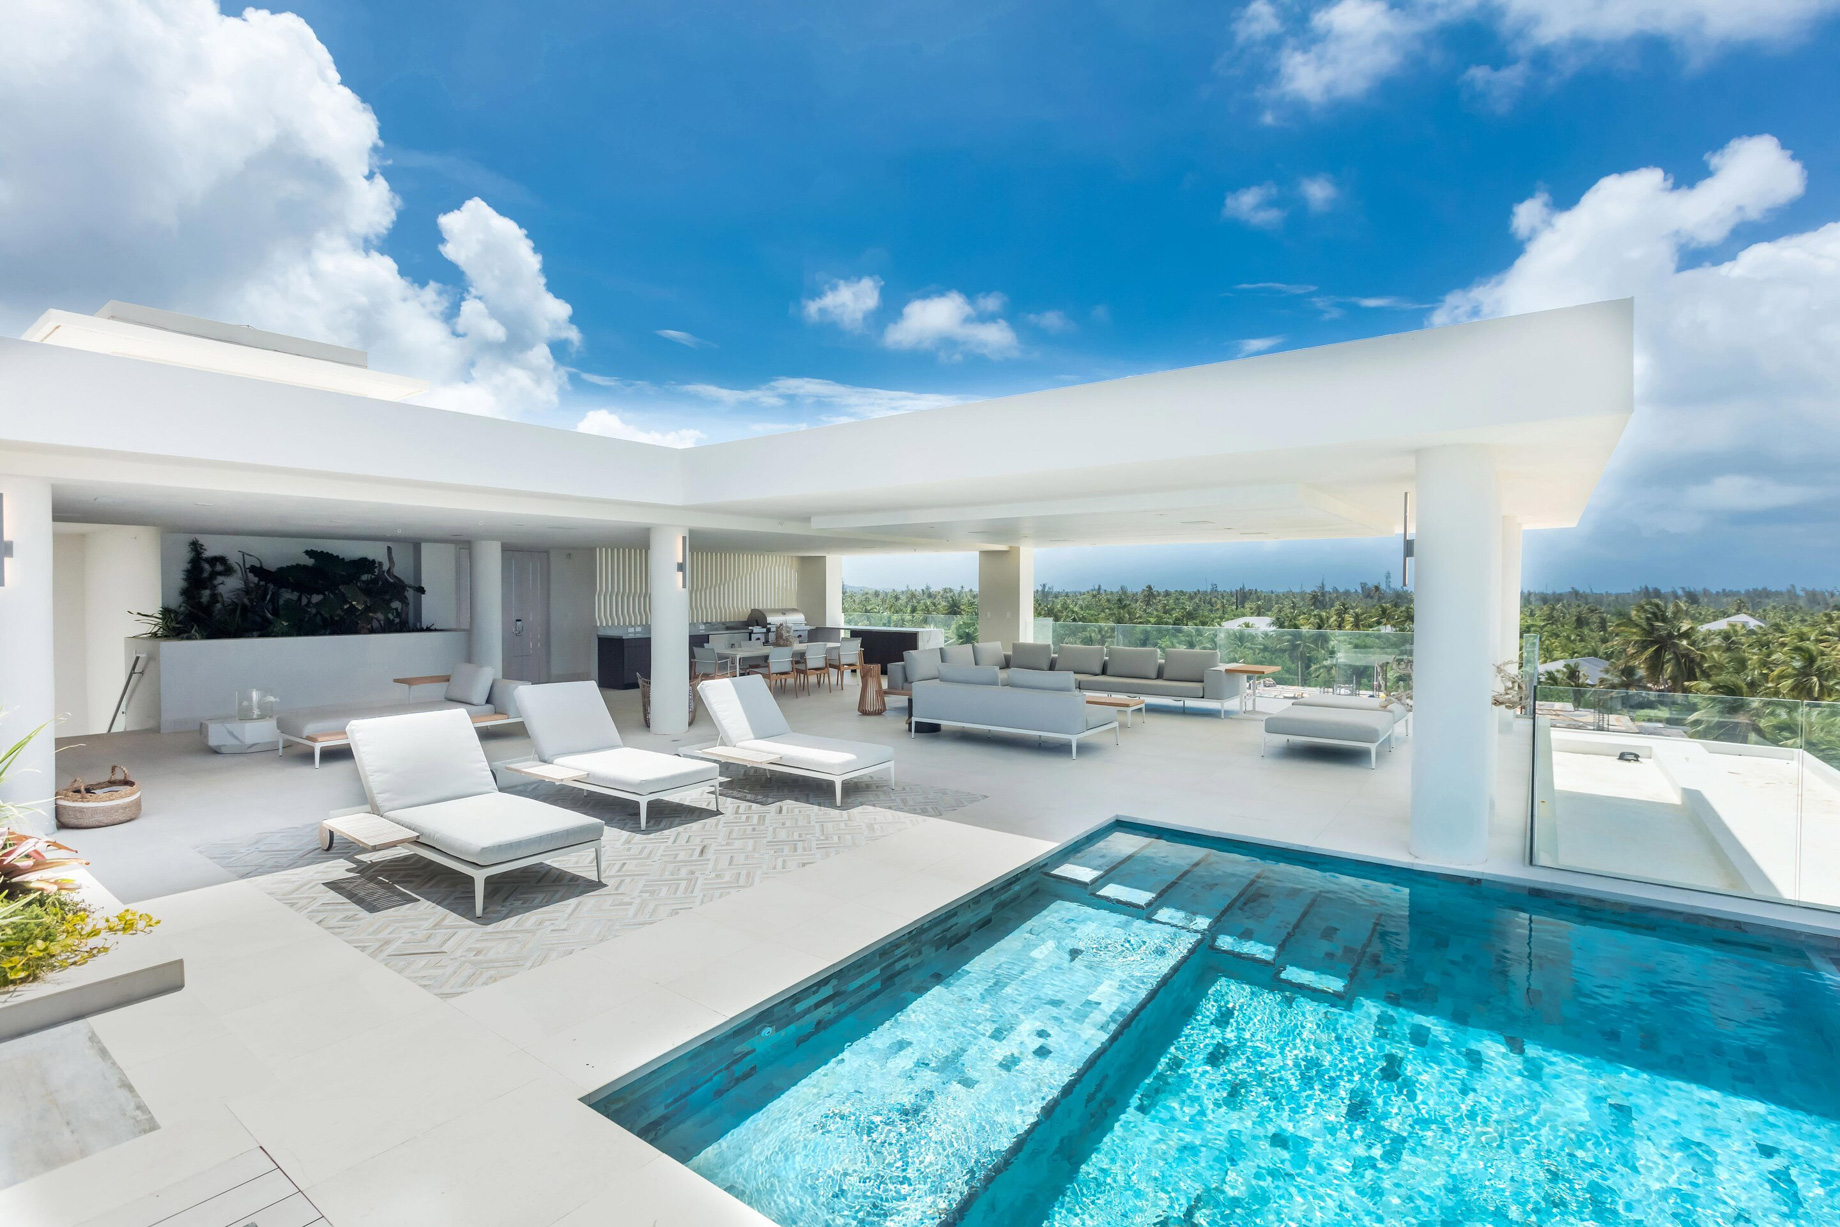 The St. Regis Bahia Beach Resort – Rio Grande, Puerto Rico – Ocean Drive Residences Penthouse Terrace